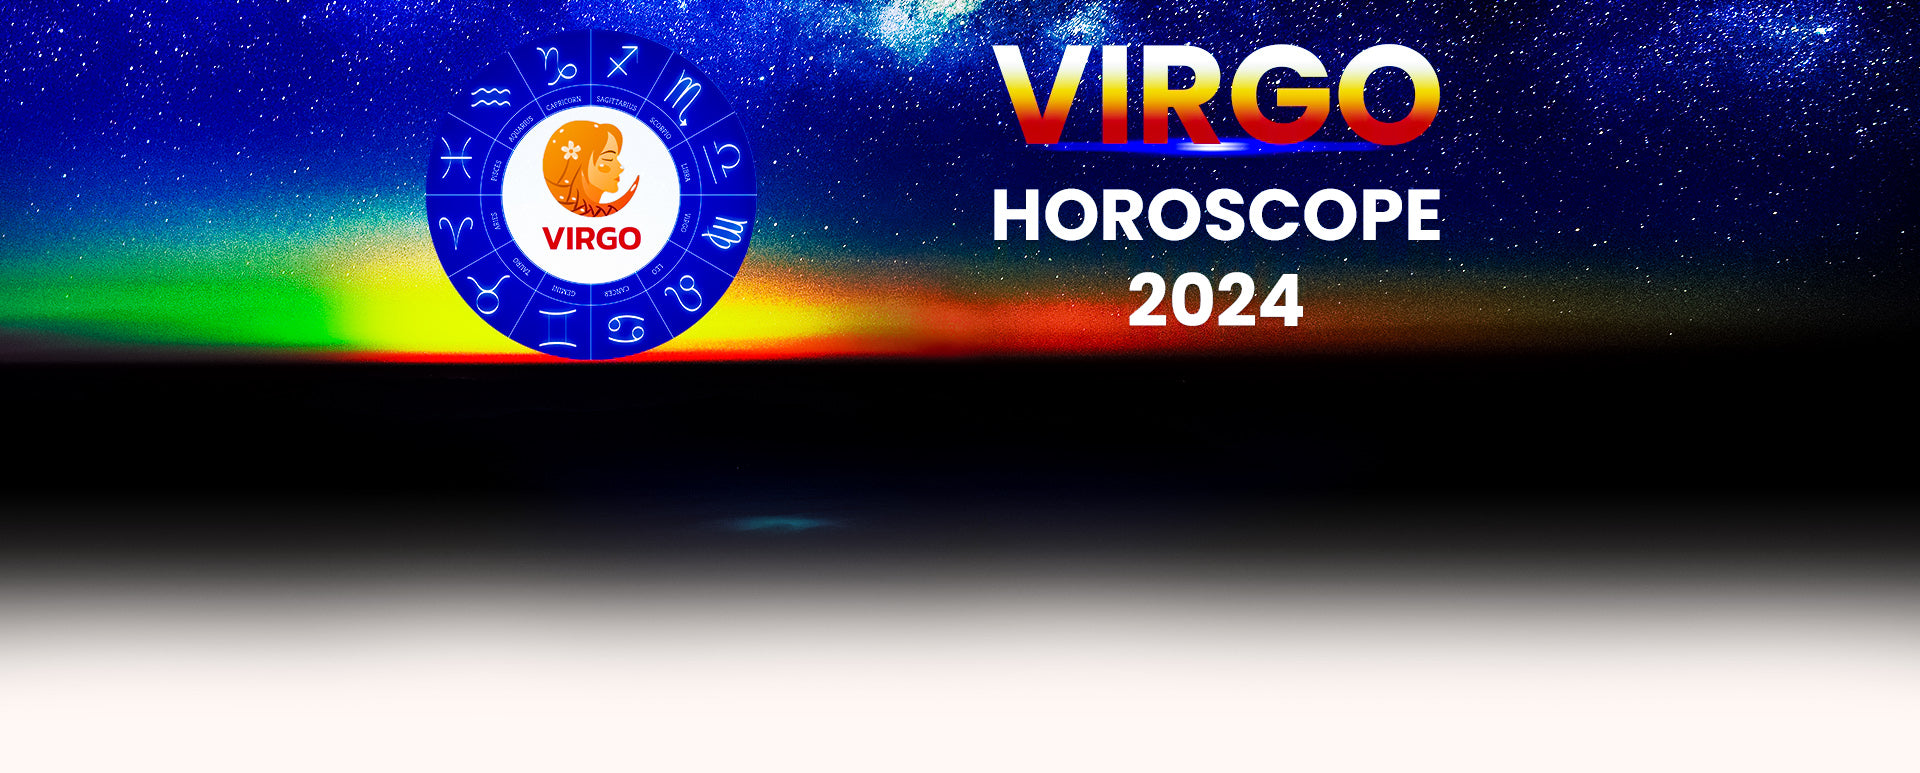 Virgo Horoscope 2024 Astrology Prediction by Bejan Daruwalla